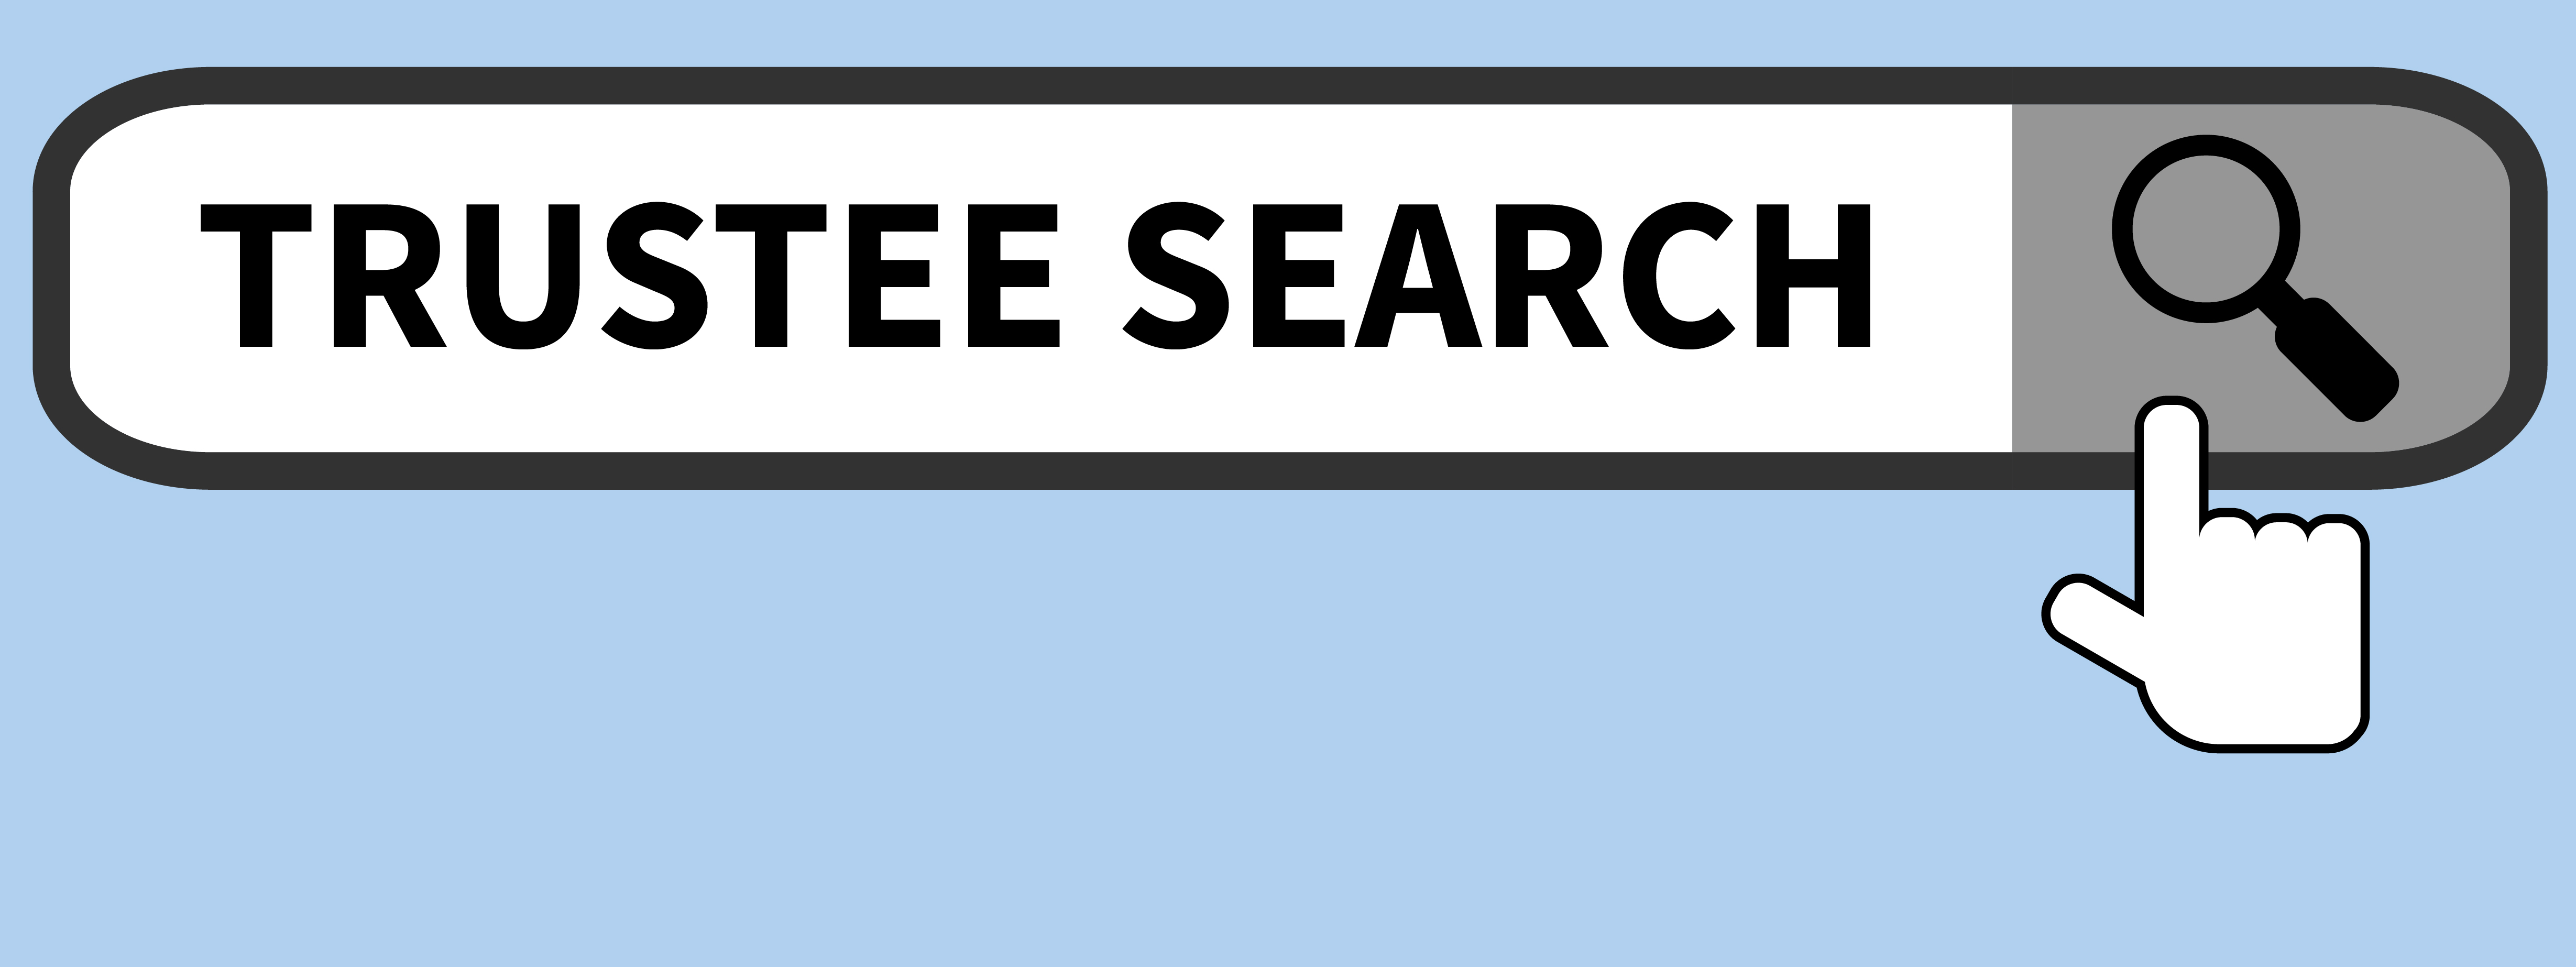 Trustee Search